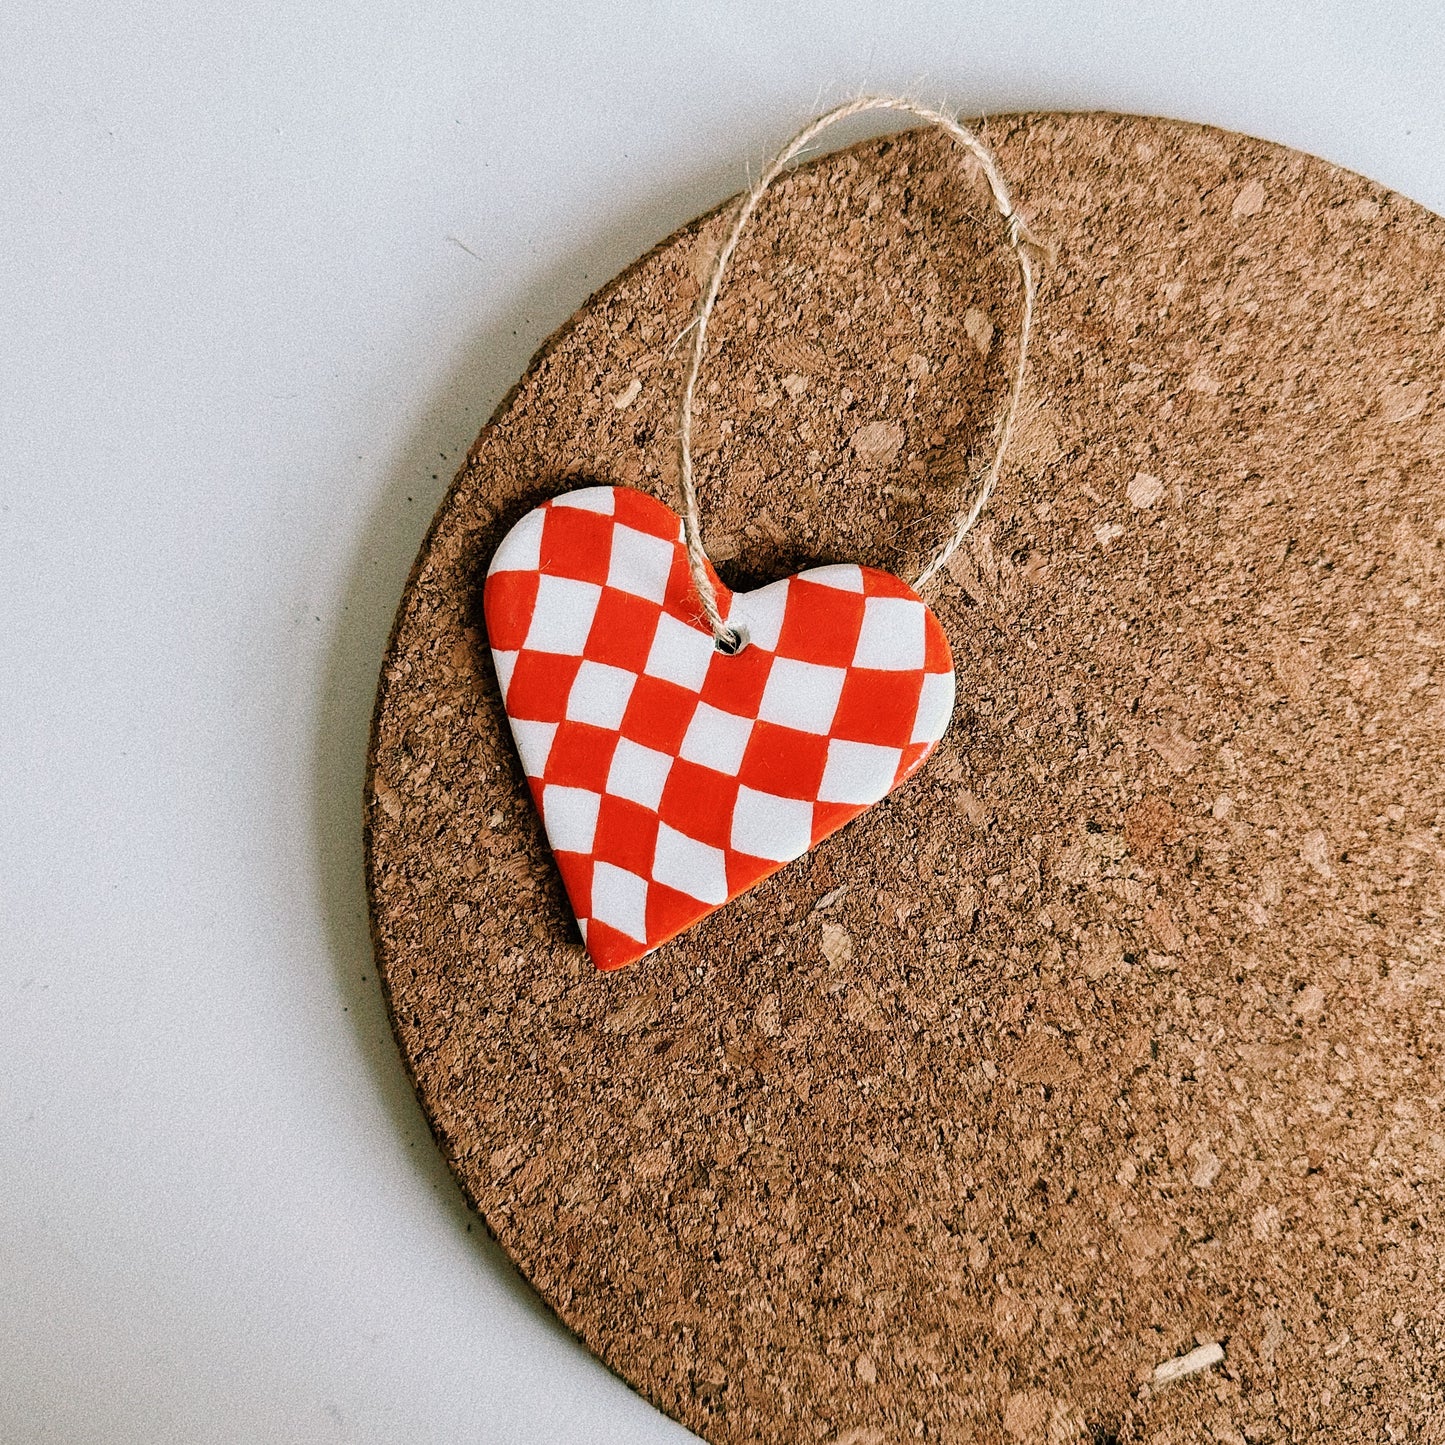 Checkerboard Heart Handmade Clay Ornament